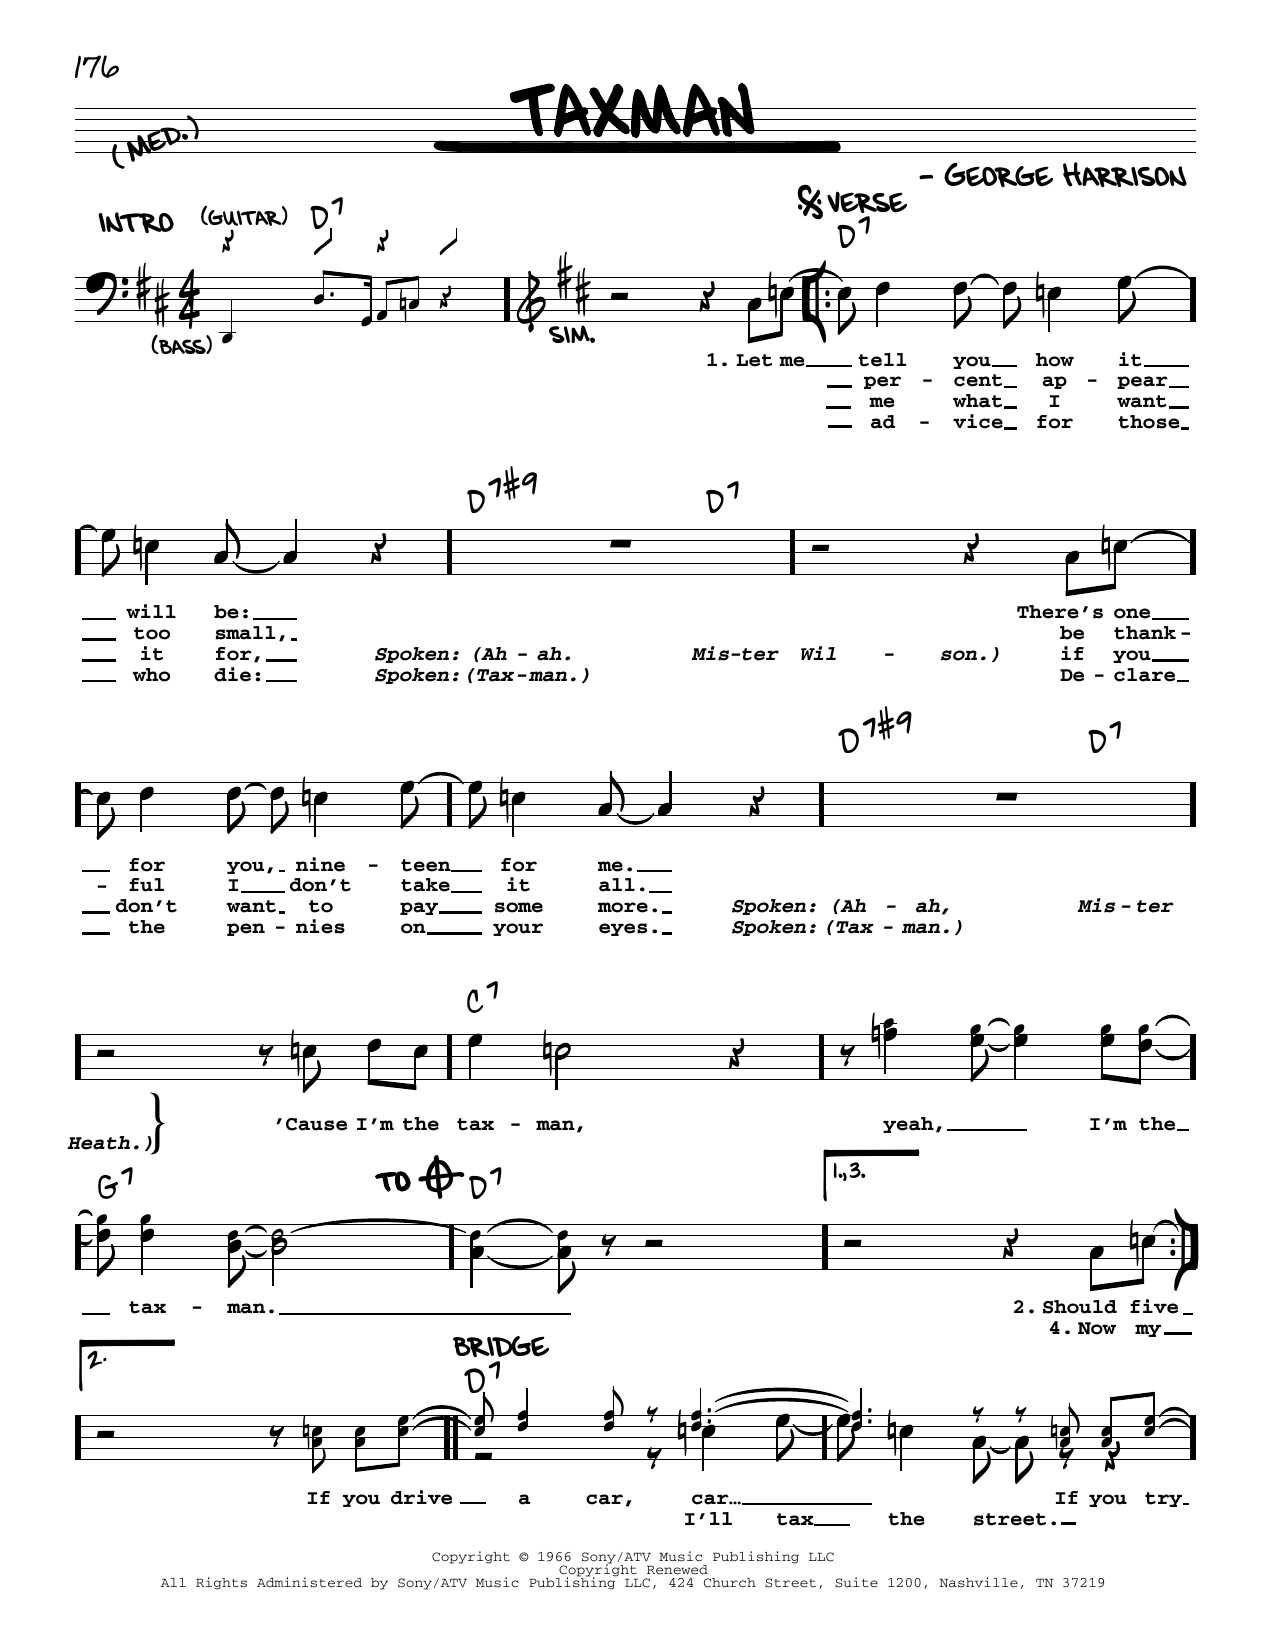 The Beatles Taxman [Jazz version] Sheet Music Notes & Chords for Real Book – Melody, Lyrics & Chords - Download or Print PDF